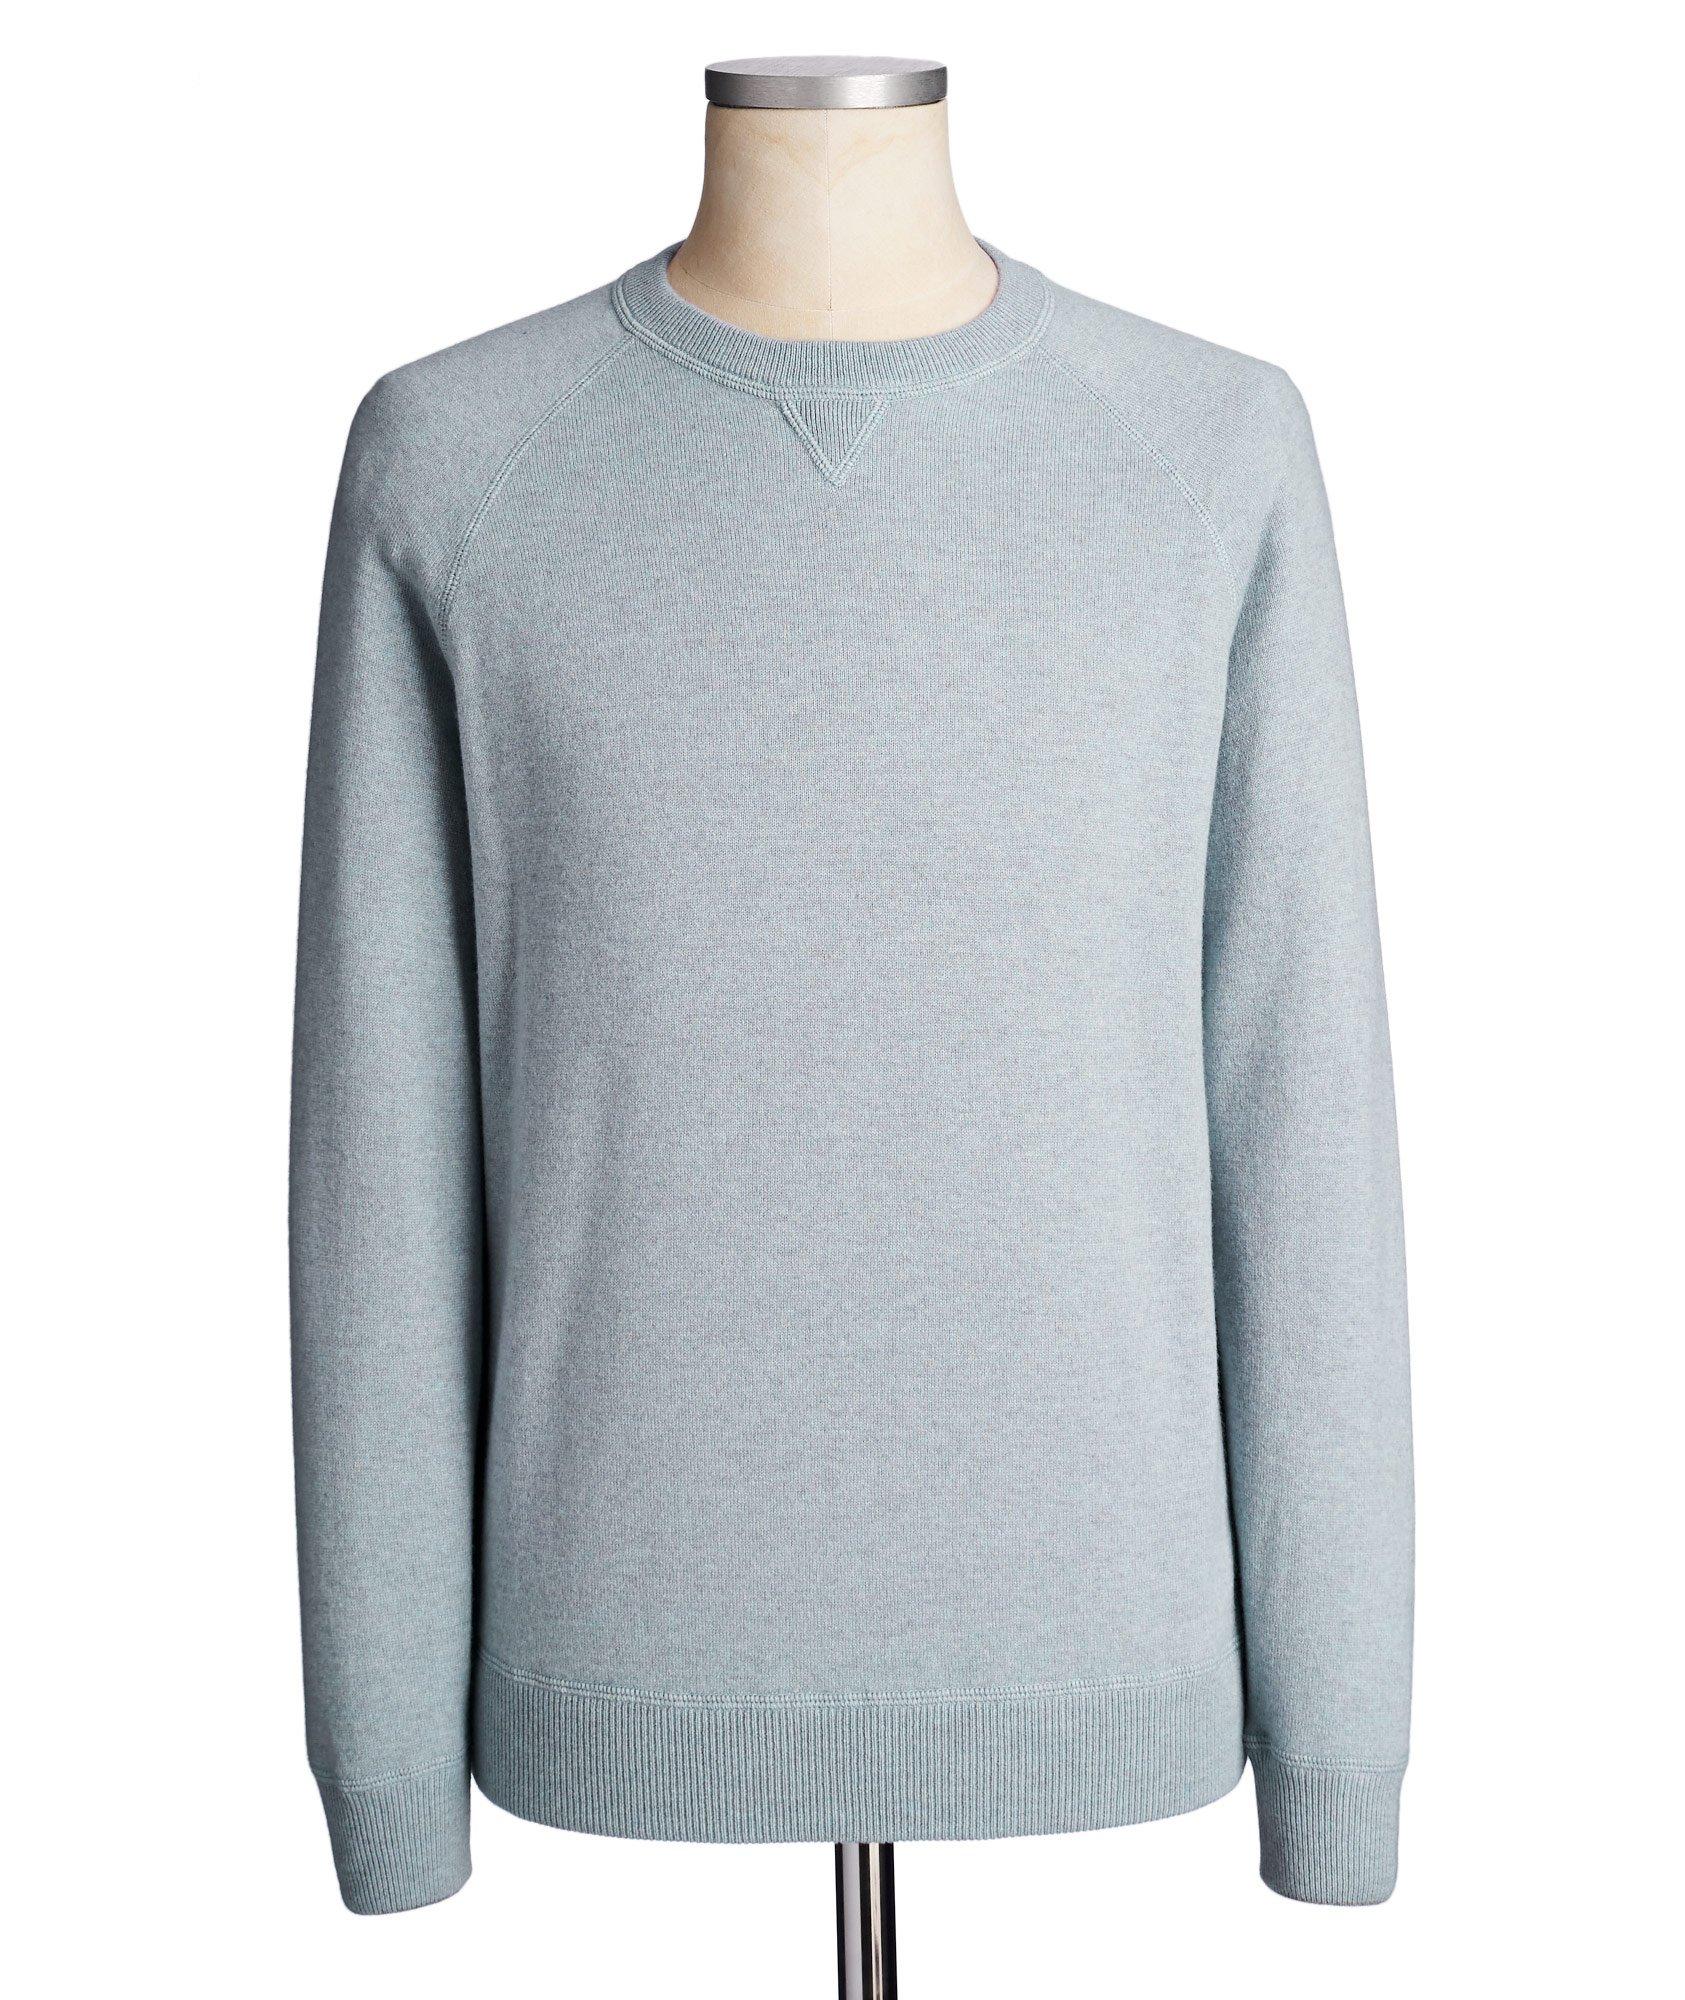 Virgin Wool & Cashmere Blend Sweater image 0